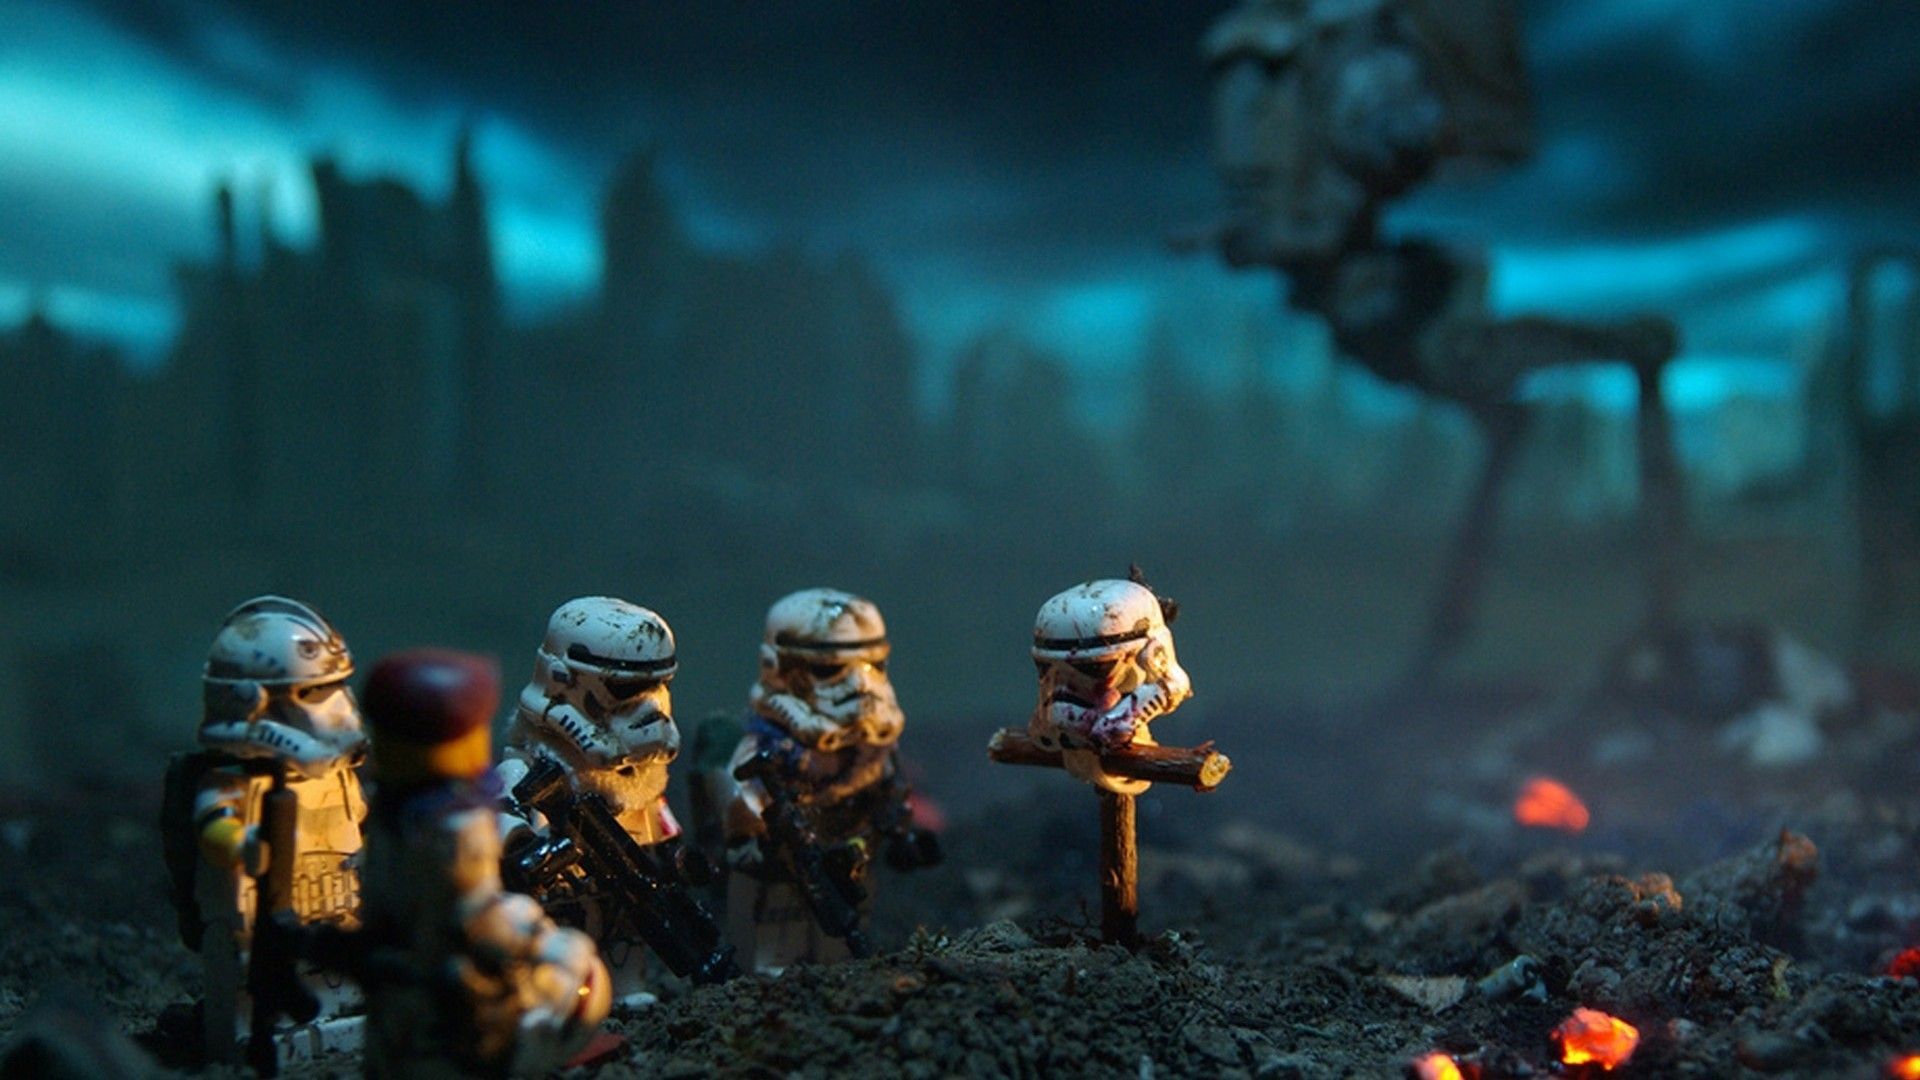 Wallpaper Star Wars Lego Soldiers - HD Wallpaper Expert